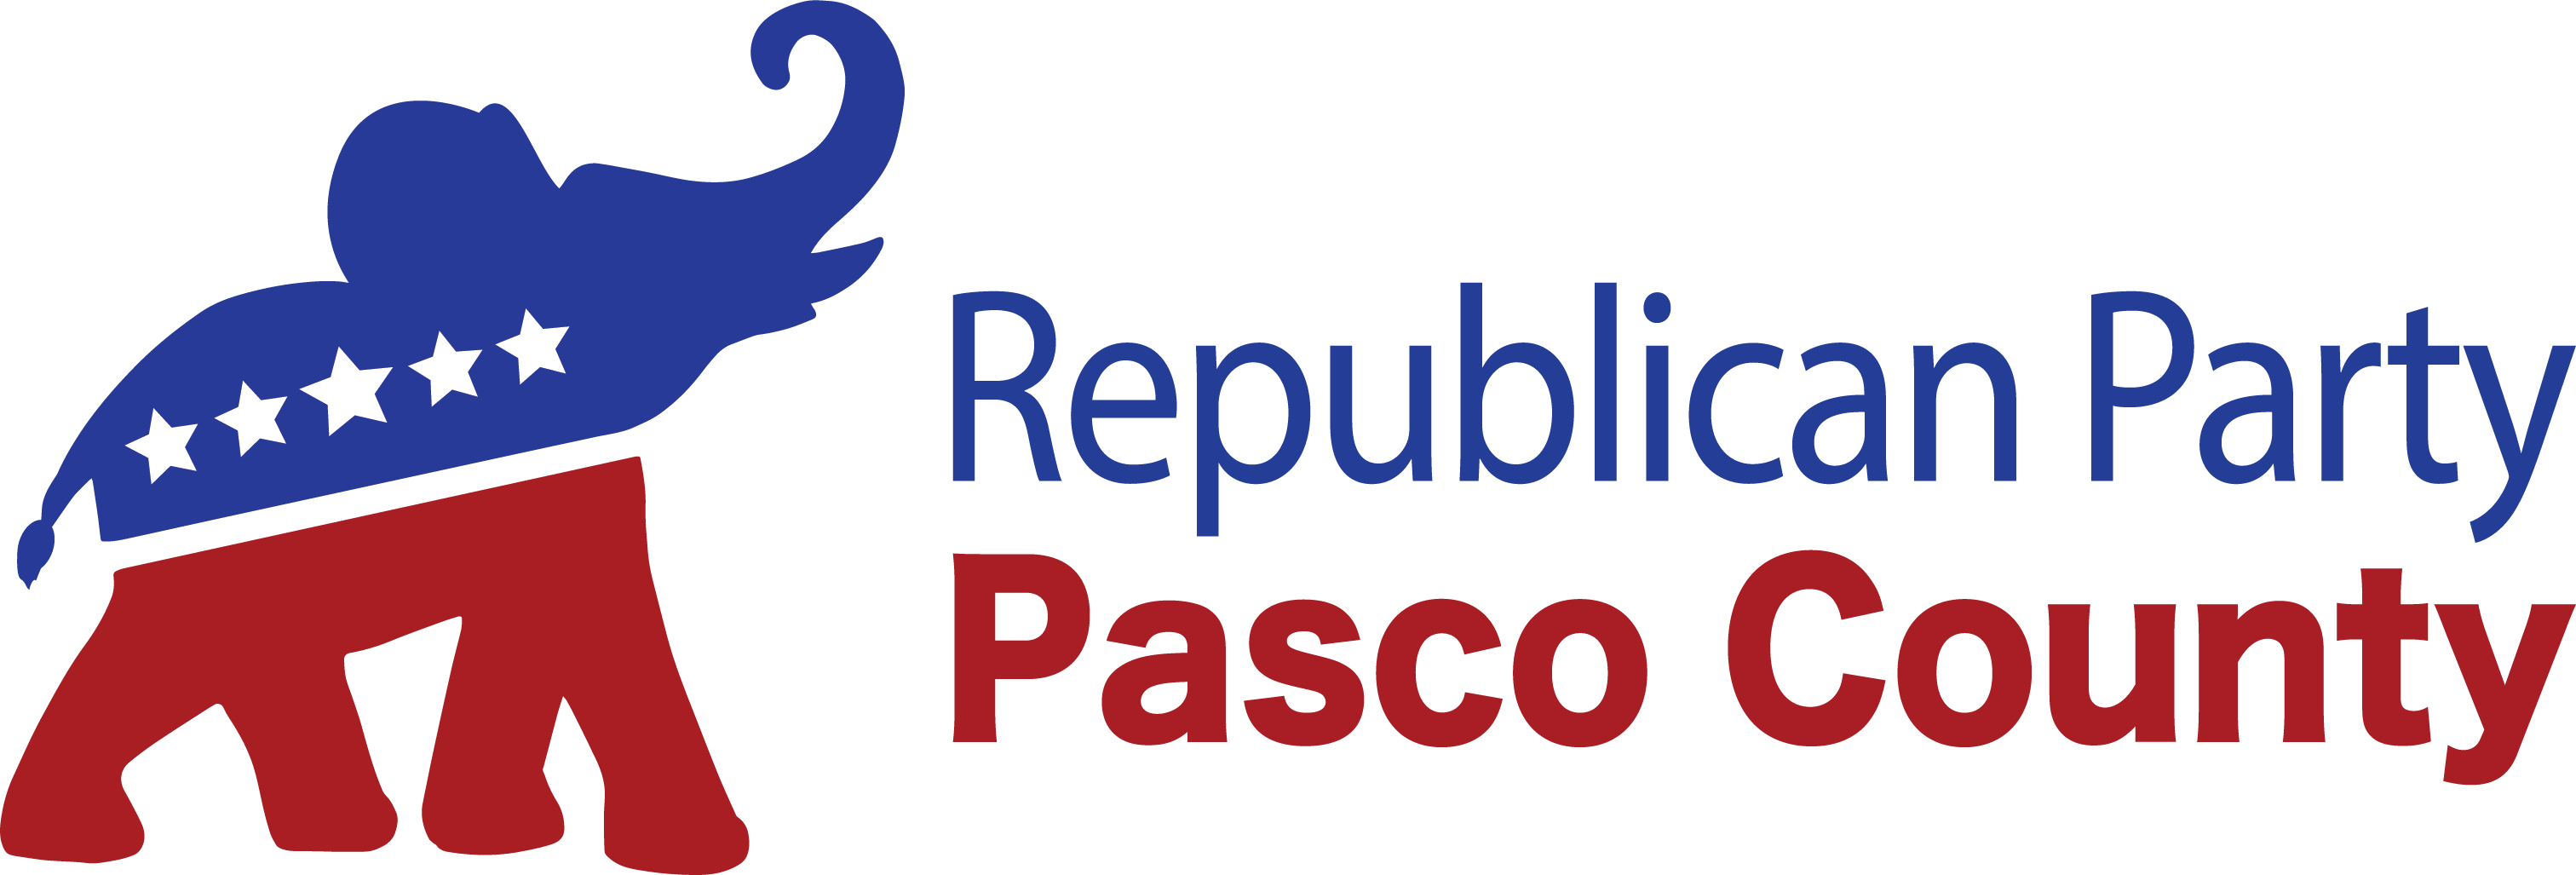 Republican Party of Pasco